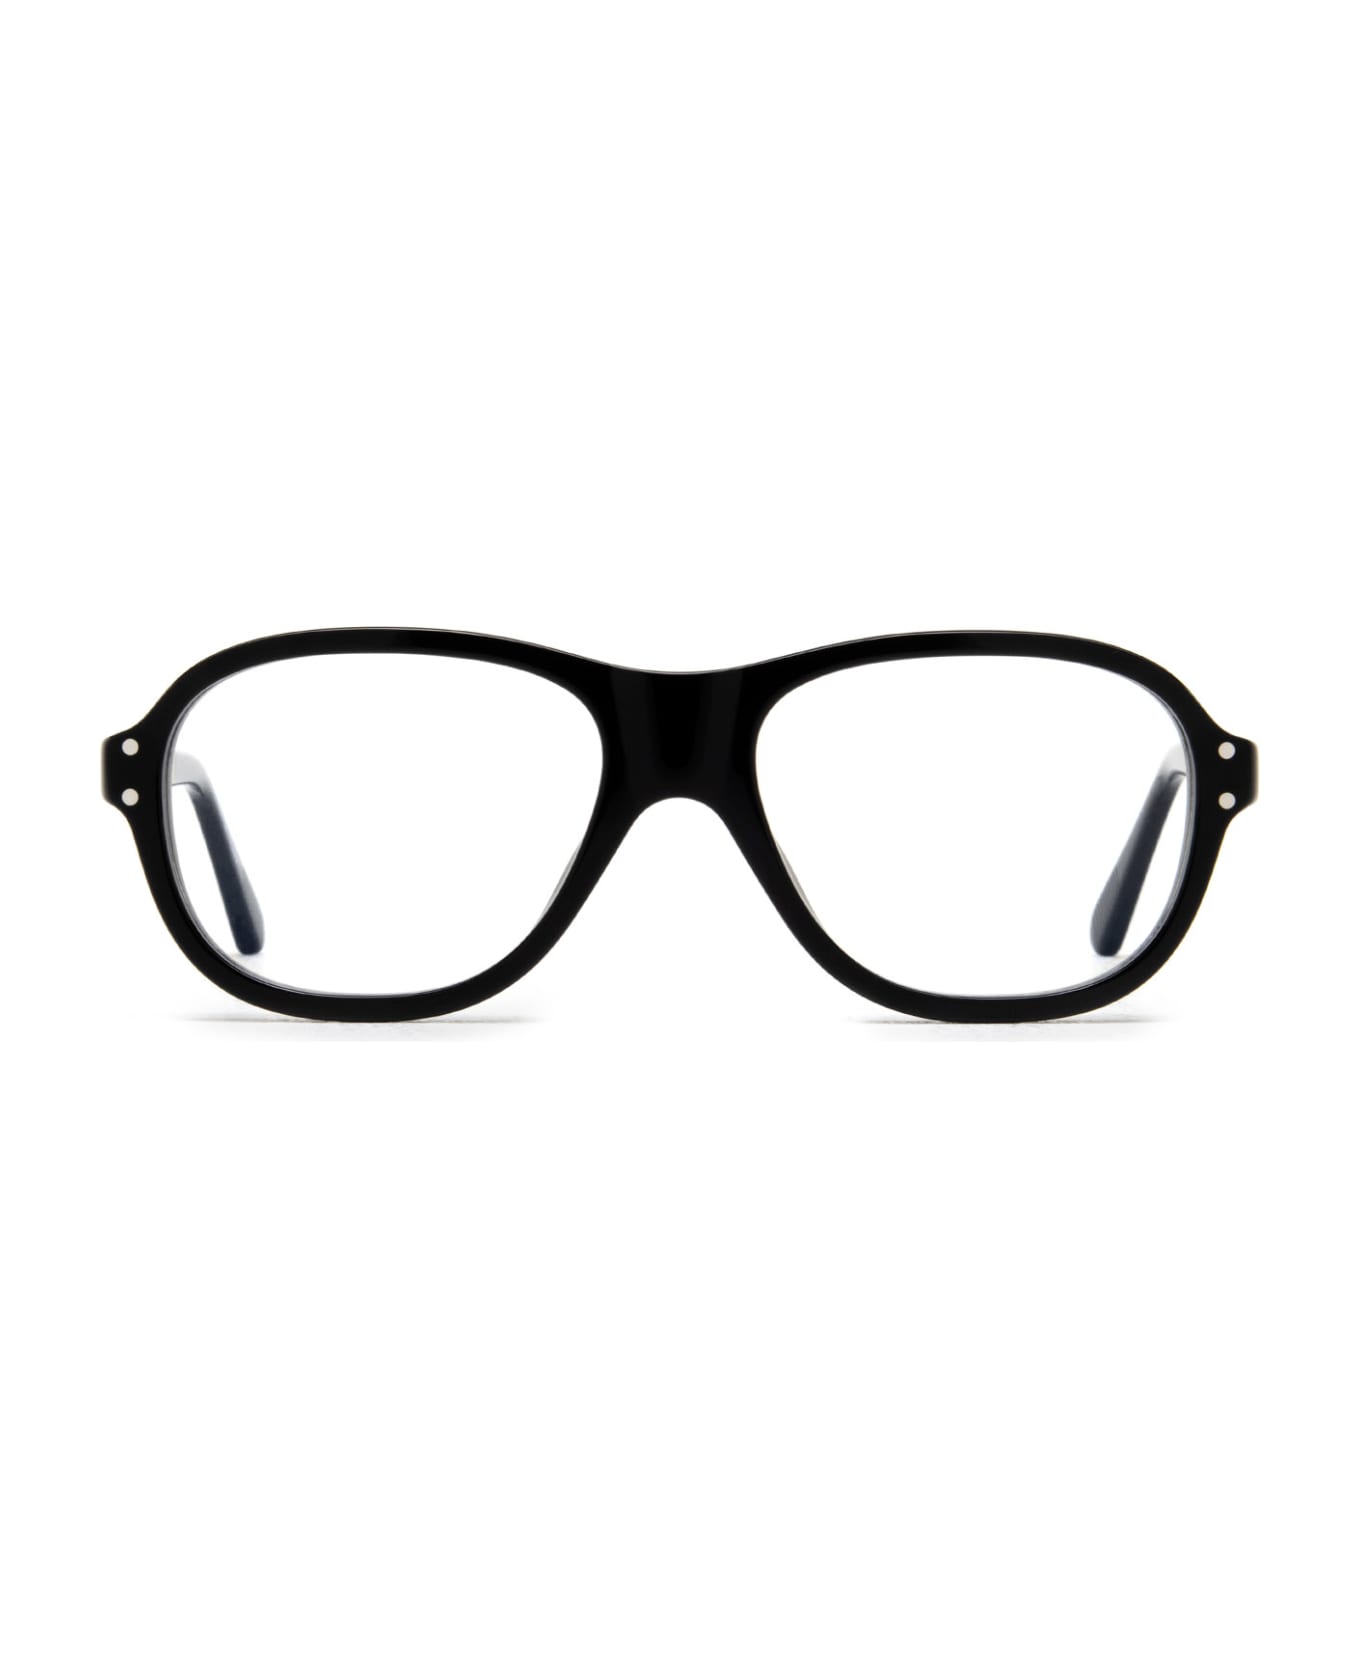 Cubitts Colonnade Black Glasses - Black アイウェア